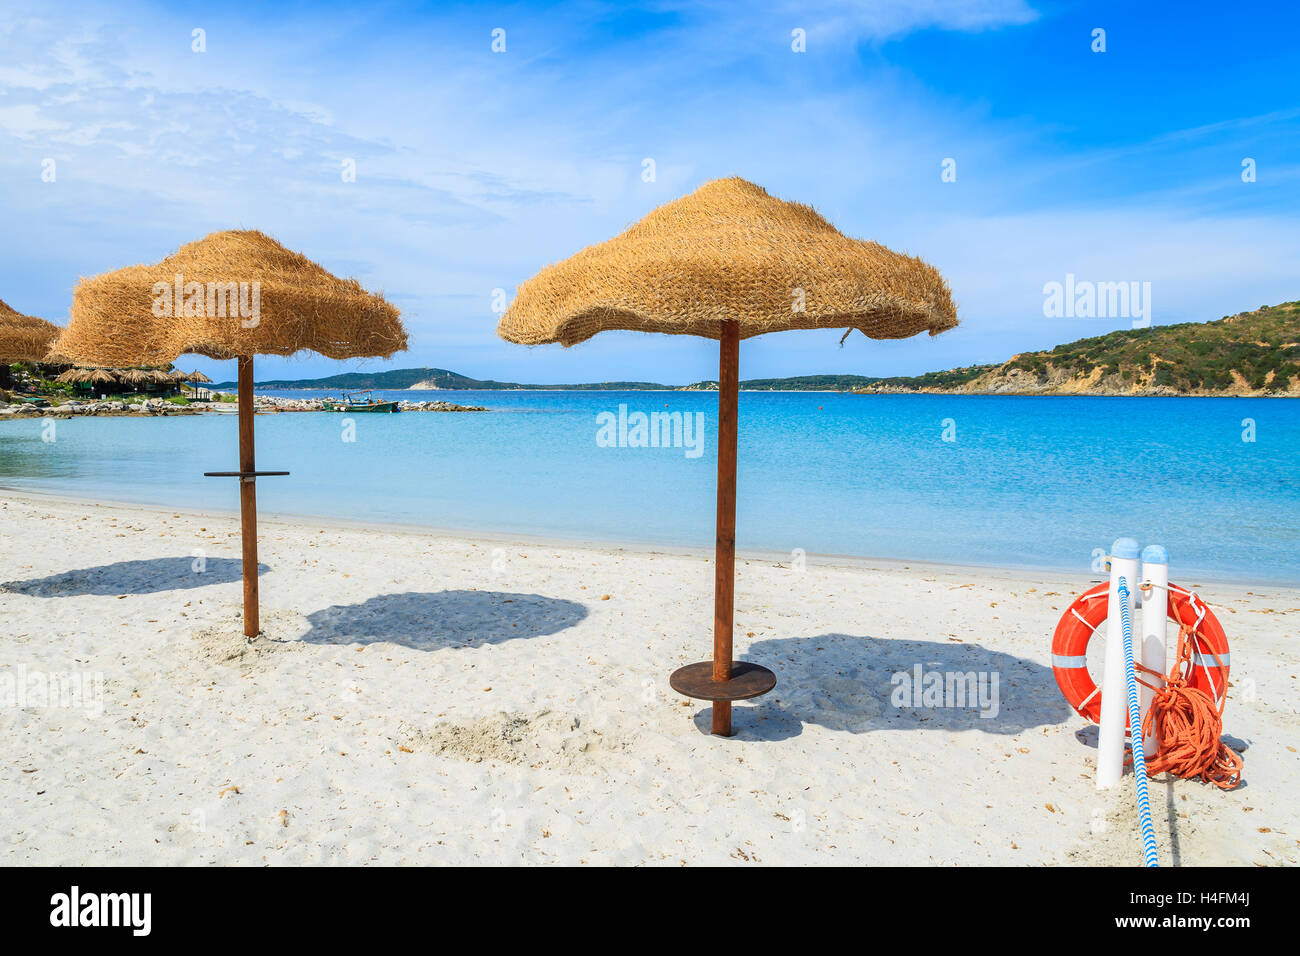 Umbrellas on Punta Molentis beach and red life ring with rope, Sardinia island, Italy Stock Photo